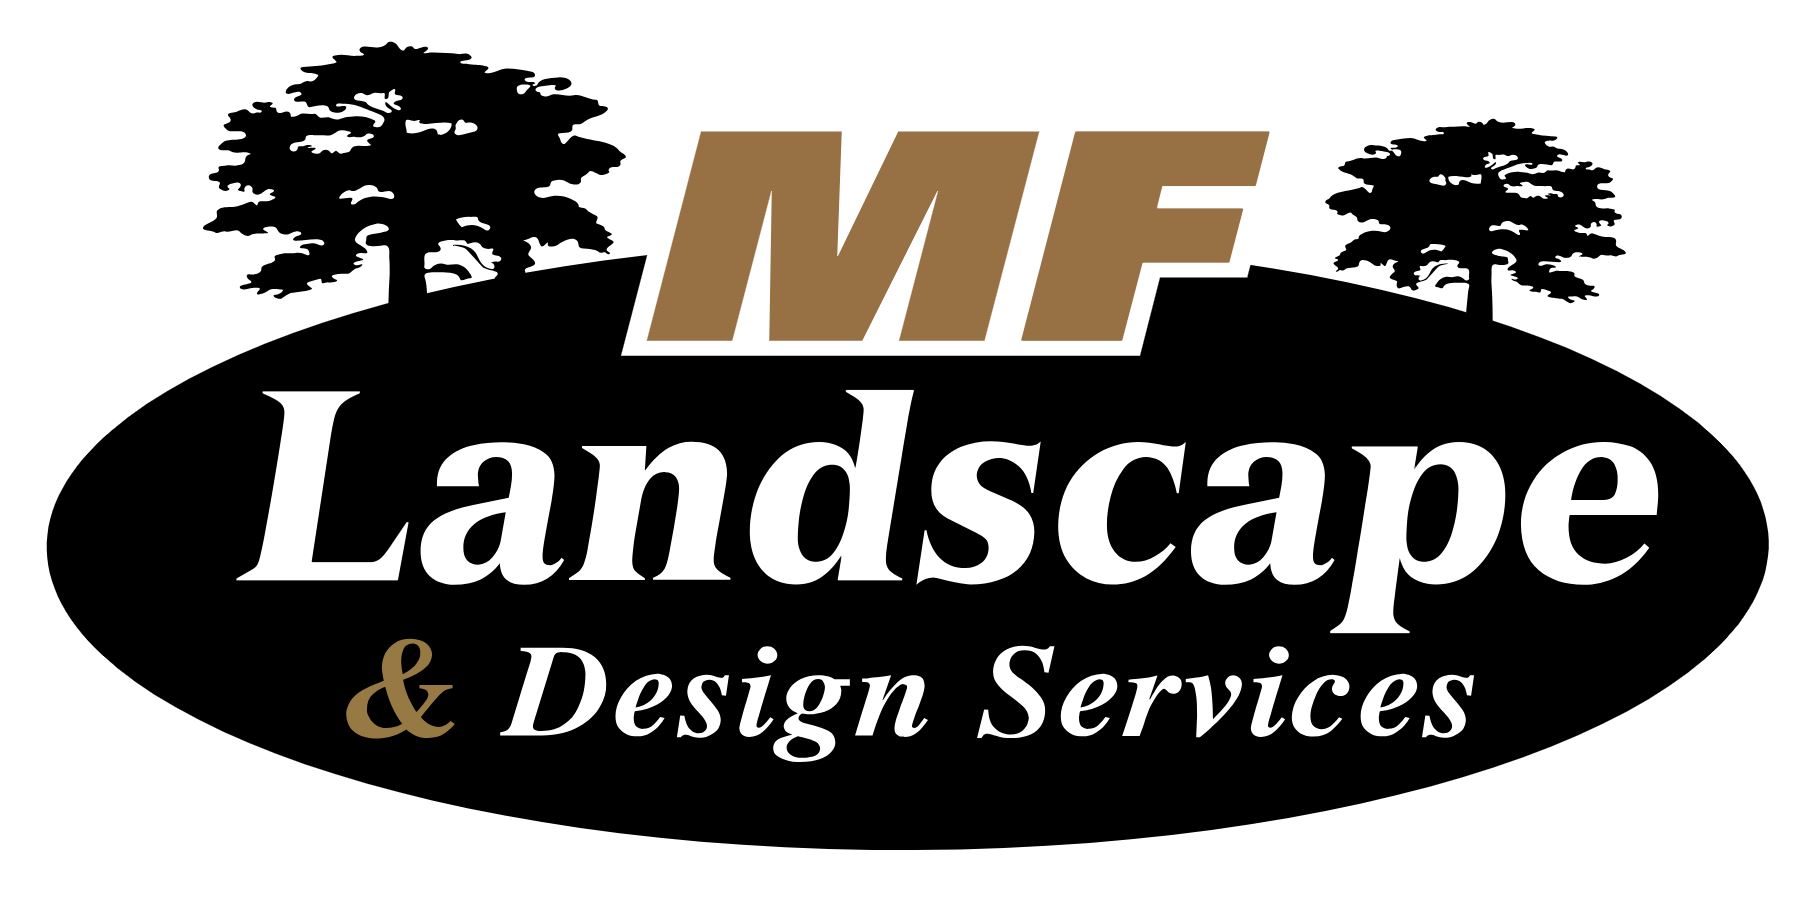 https://cloudlinks.s3.amazonaws.com/landscaping/86ep5md4j/img/logo.jpg